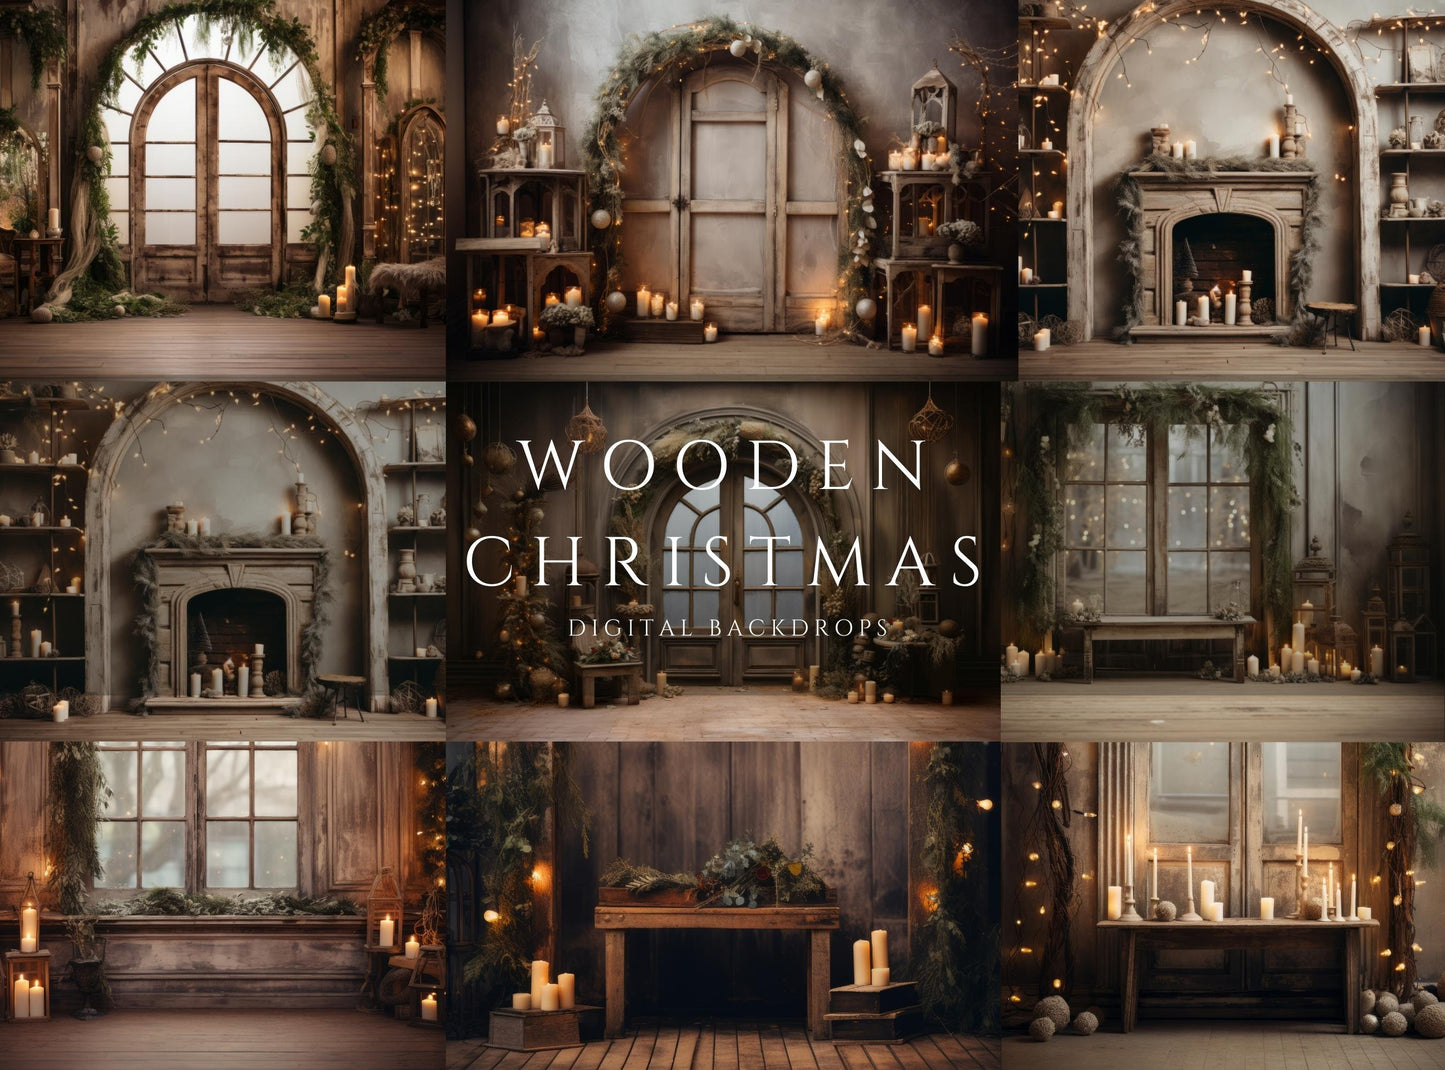 Wooden Christmas Digital Backdrops